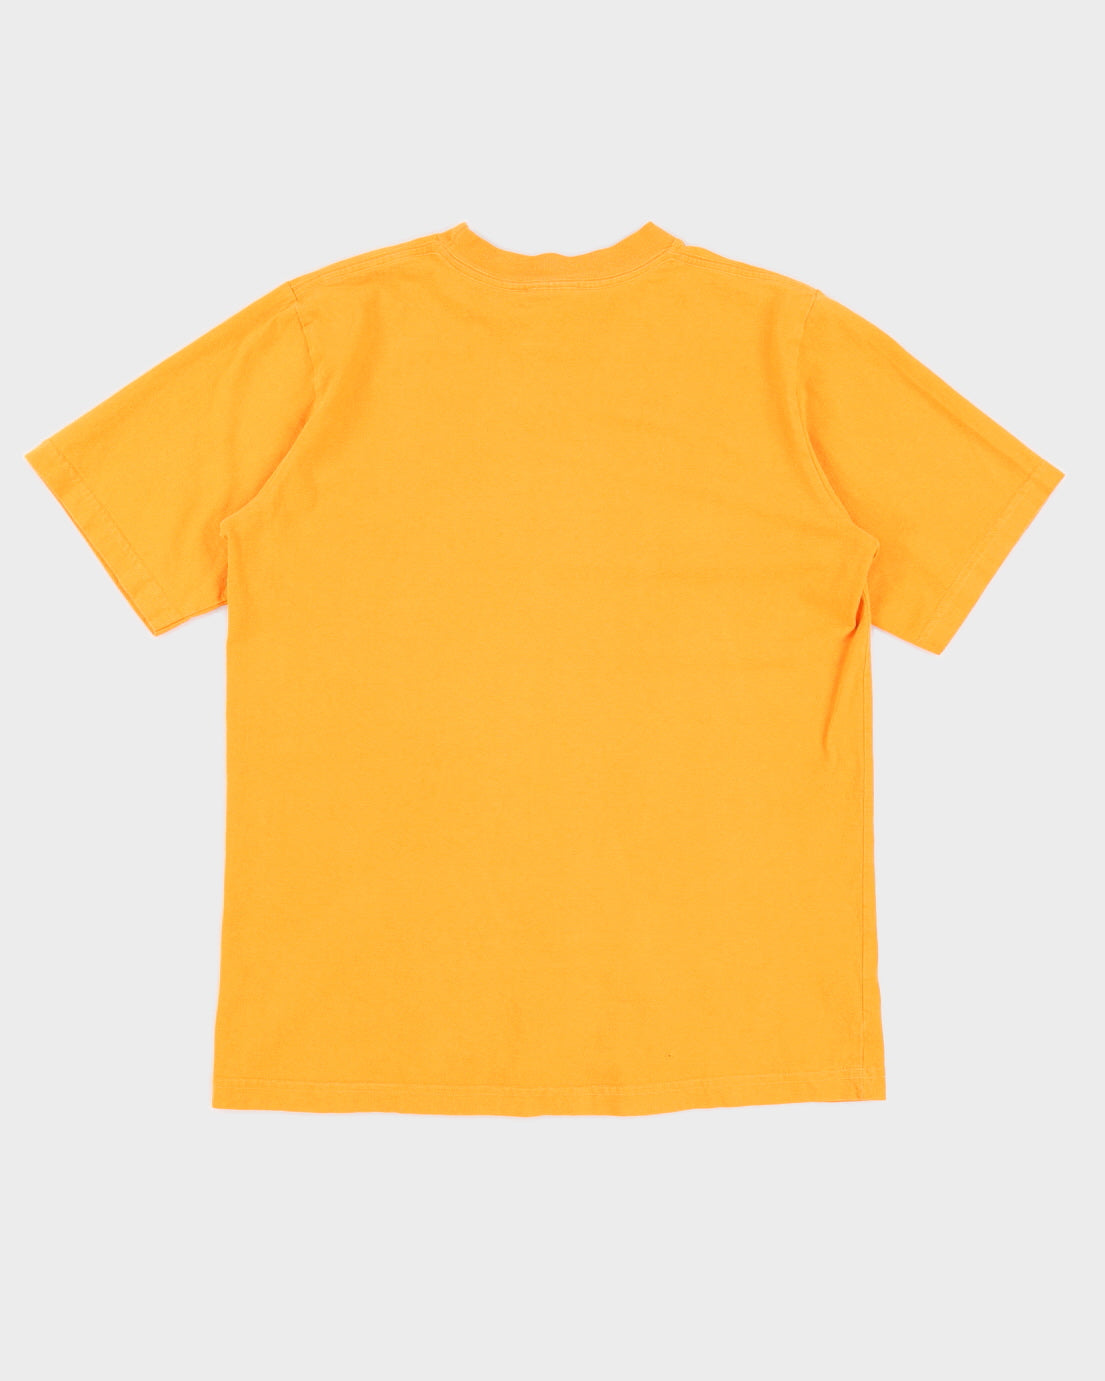 00s Adidas Orange T-Shirt - M